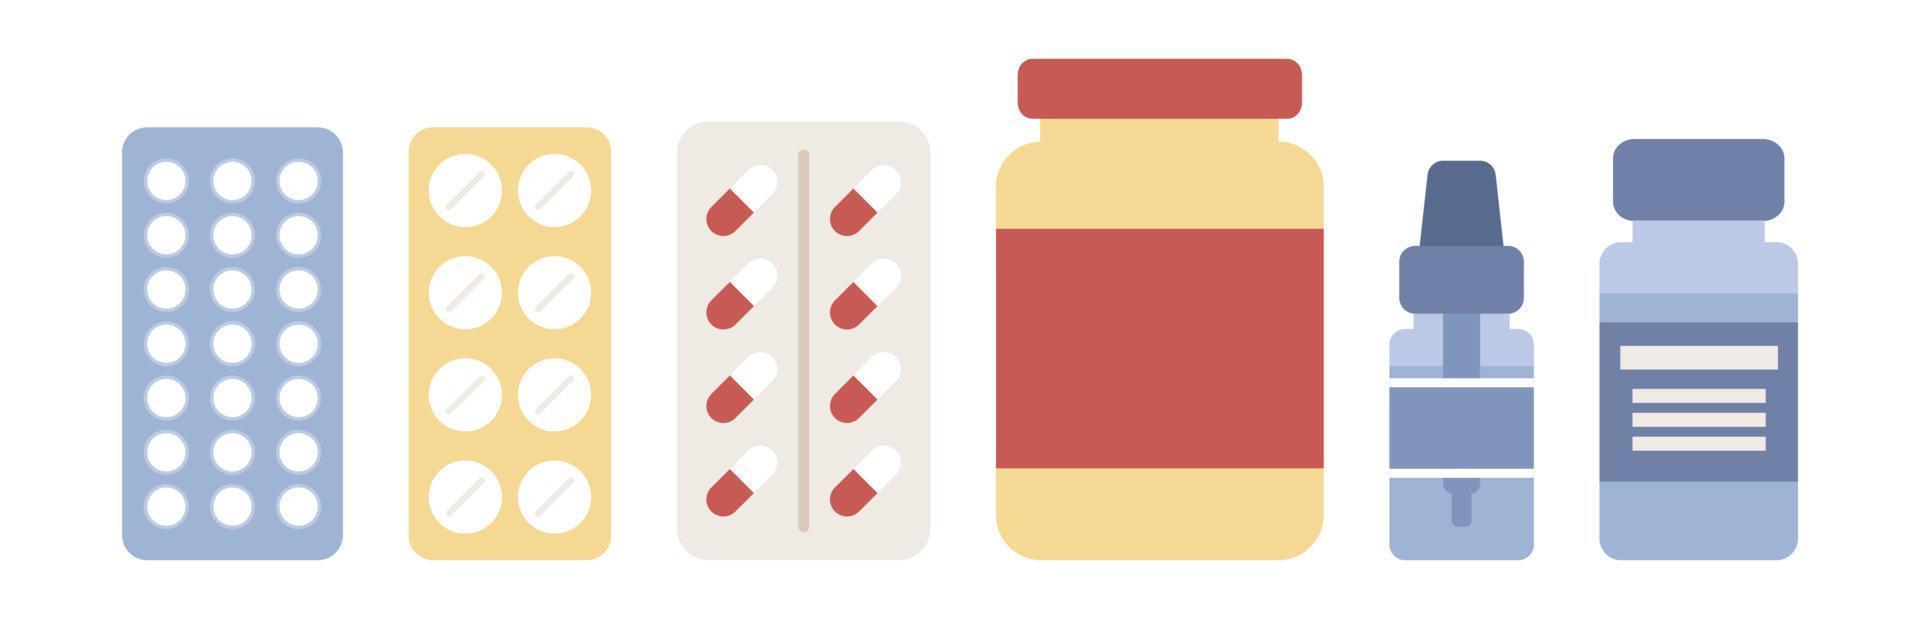 Medicine, medical supplies, bottles, liquids, pills. Pharmacy icon. Medicine chest. Health Care concept. Vector flat illustration